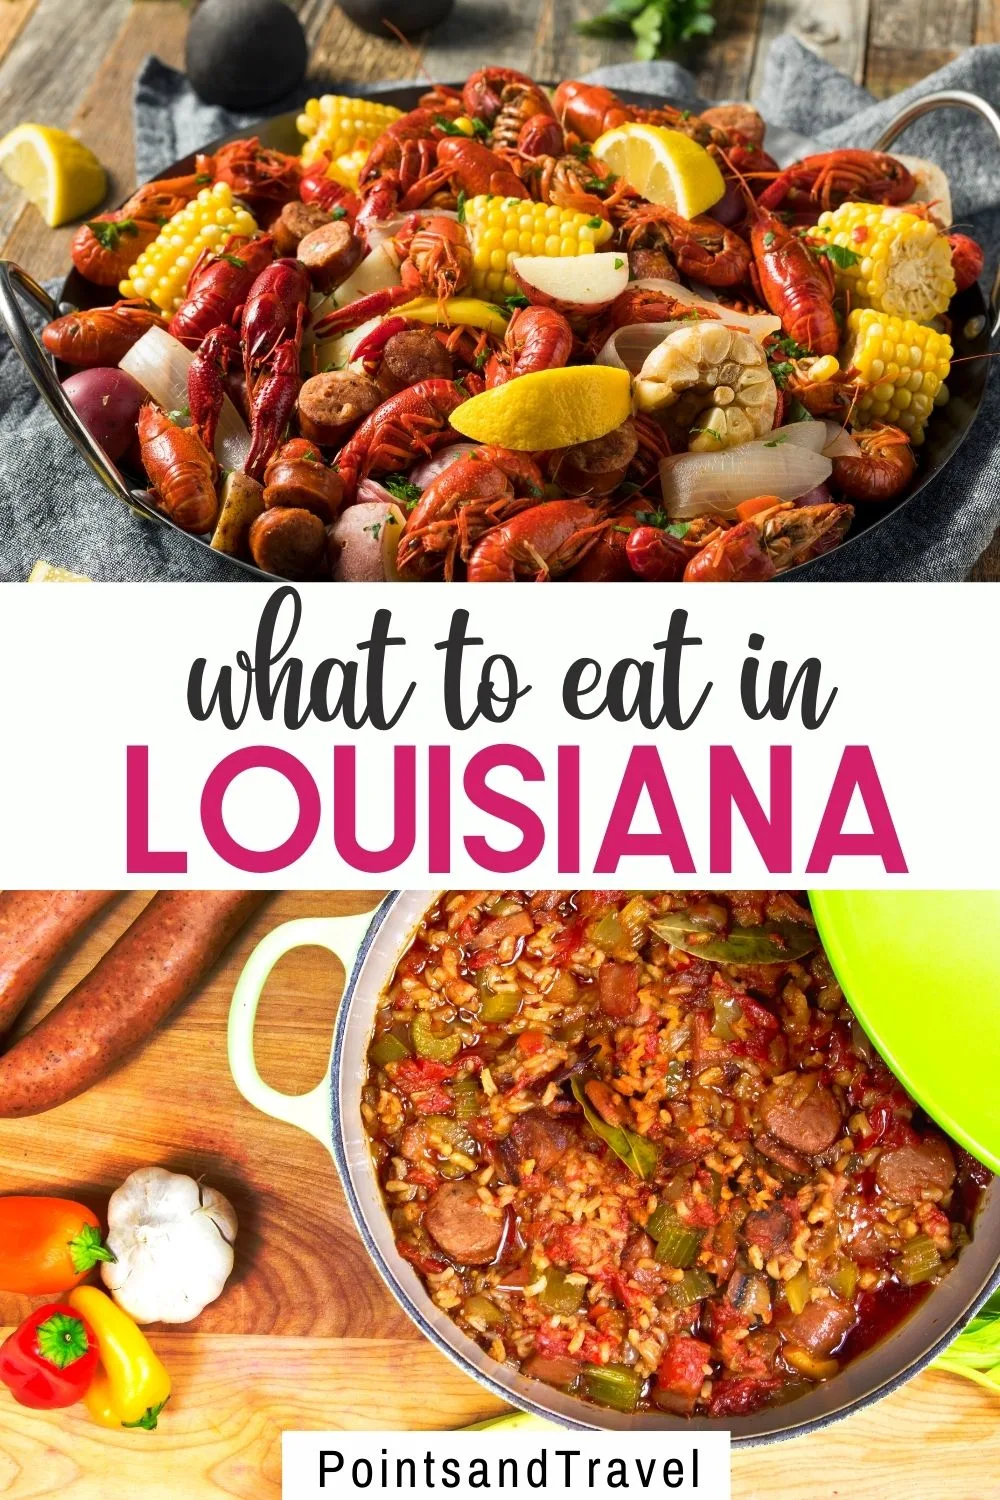 Foods of Louisiana, Louisiana cuisine, Louisiana dishes